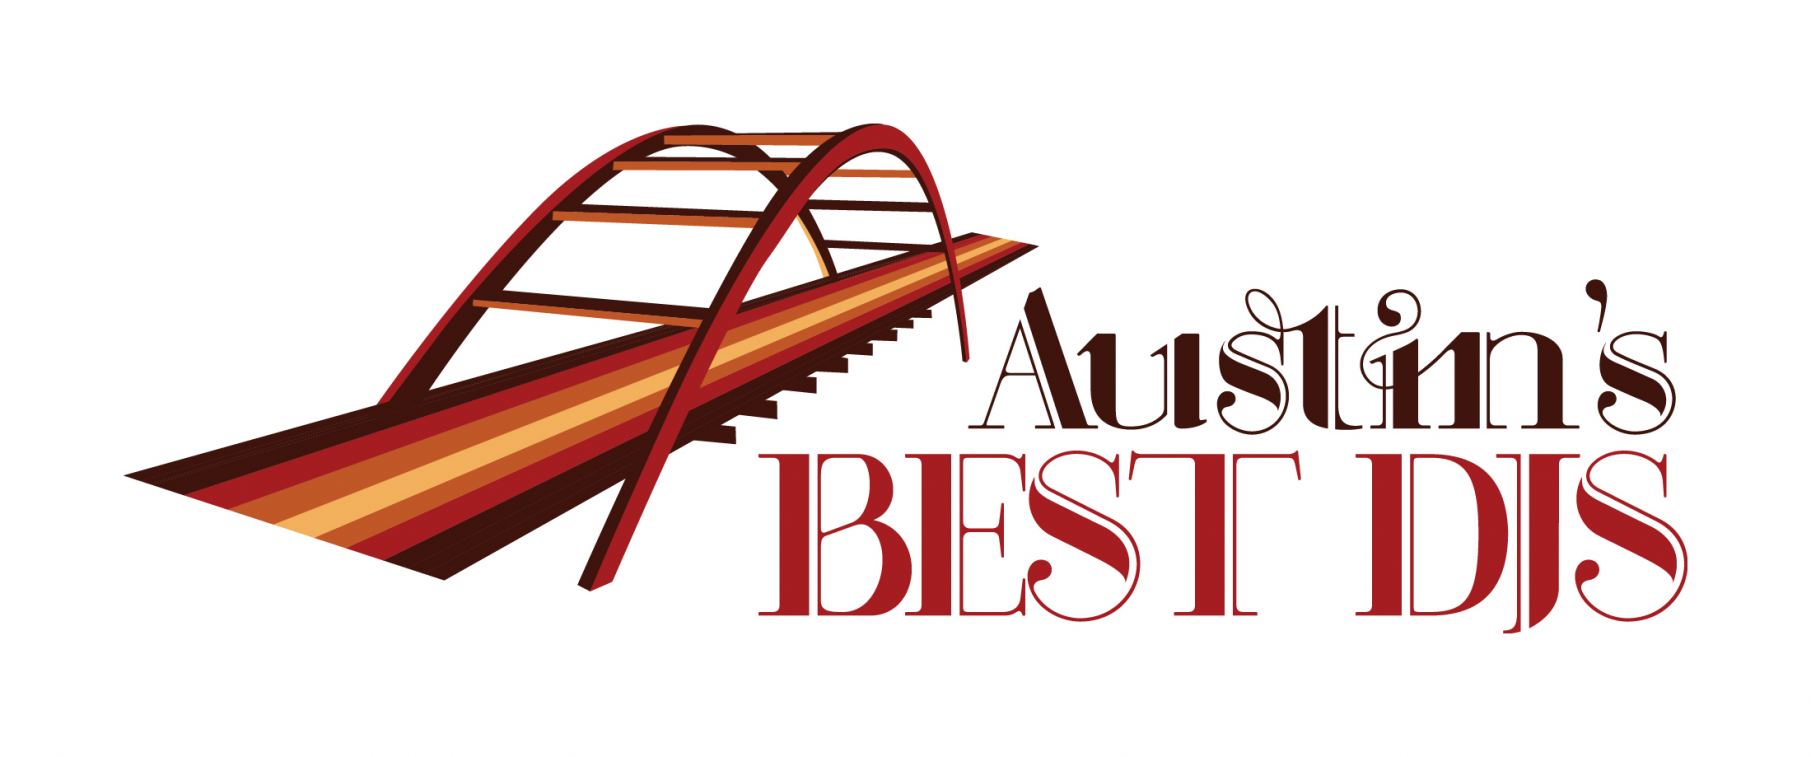 Austins-Best-DJs Logo